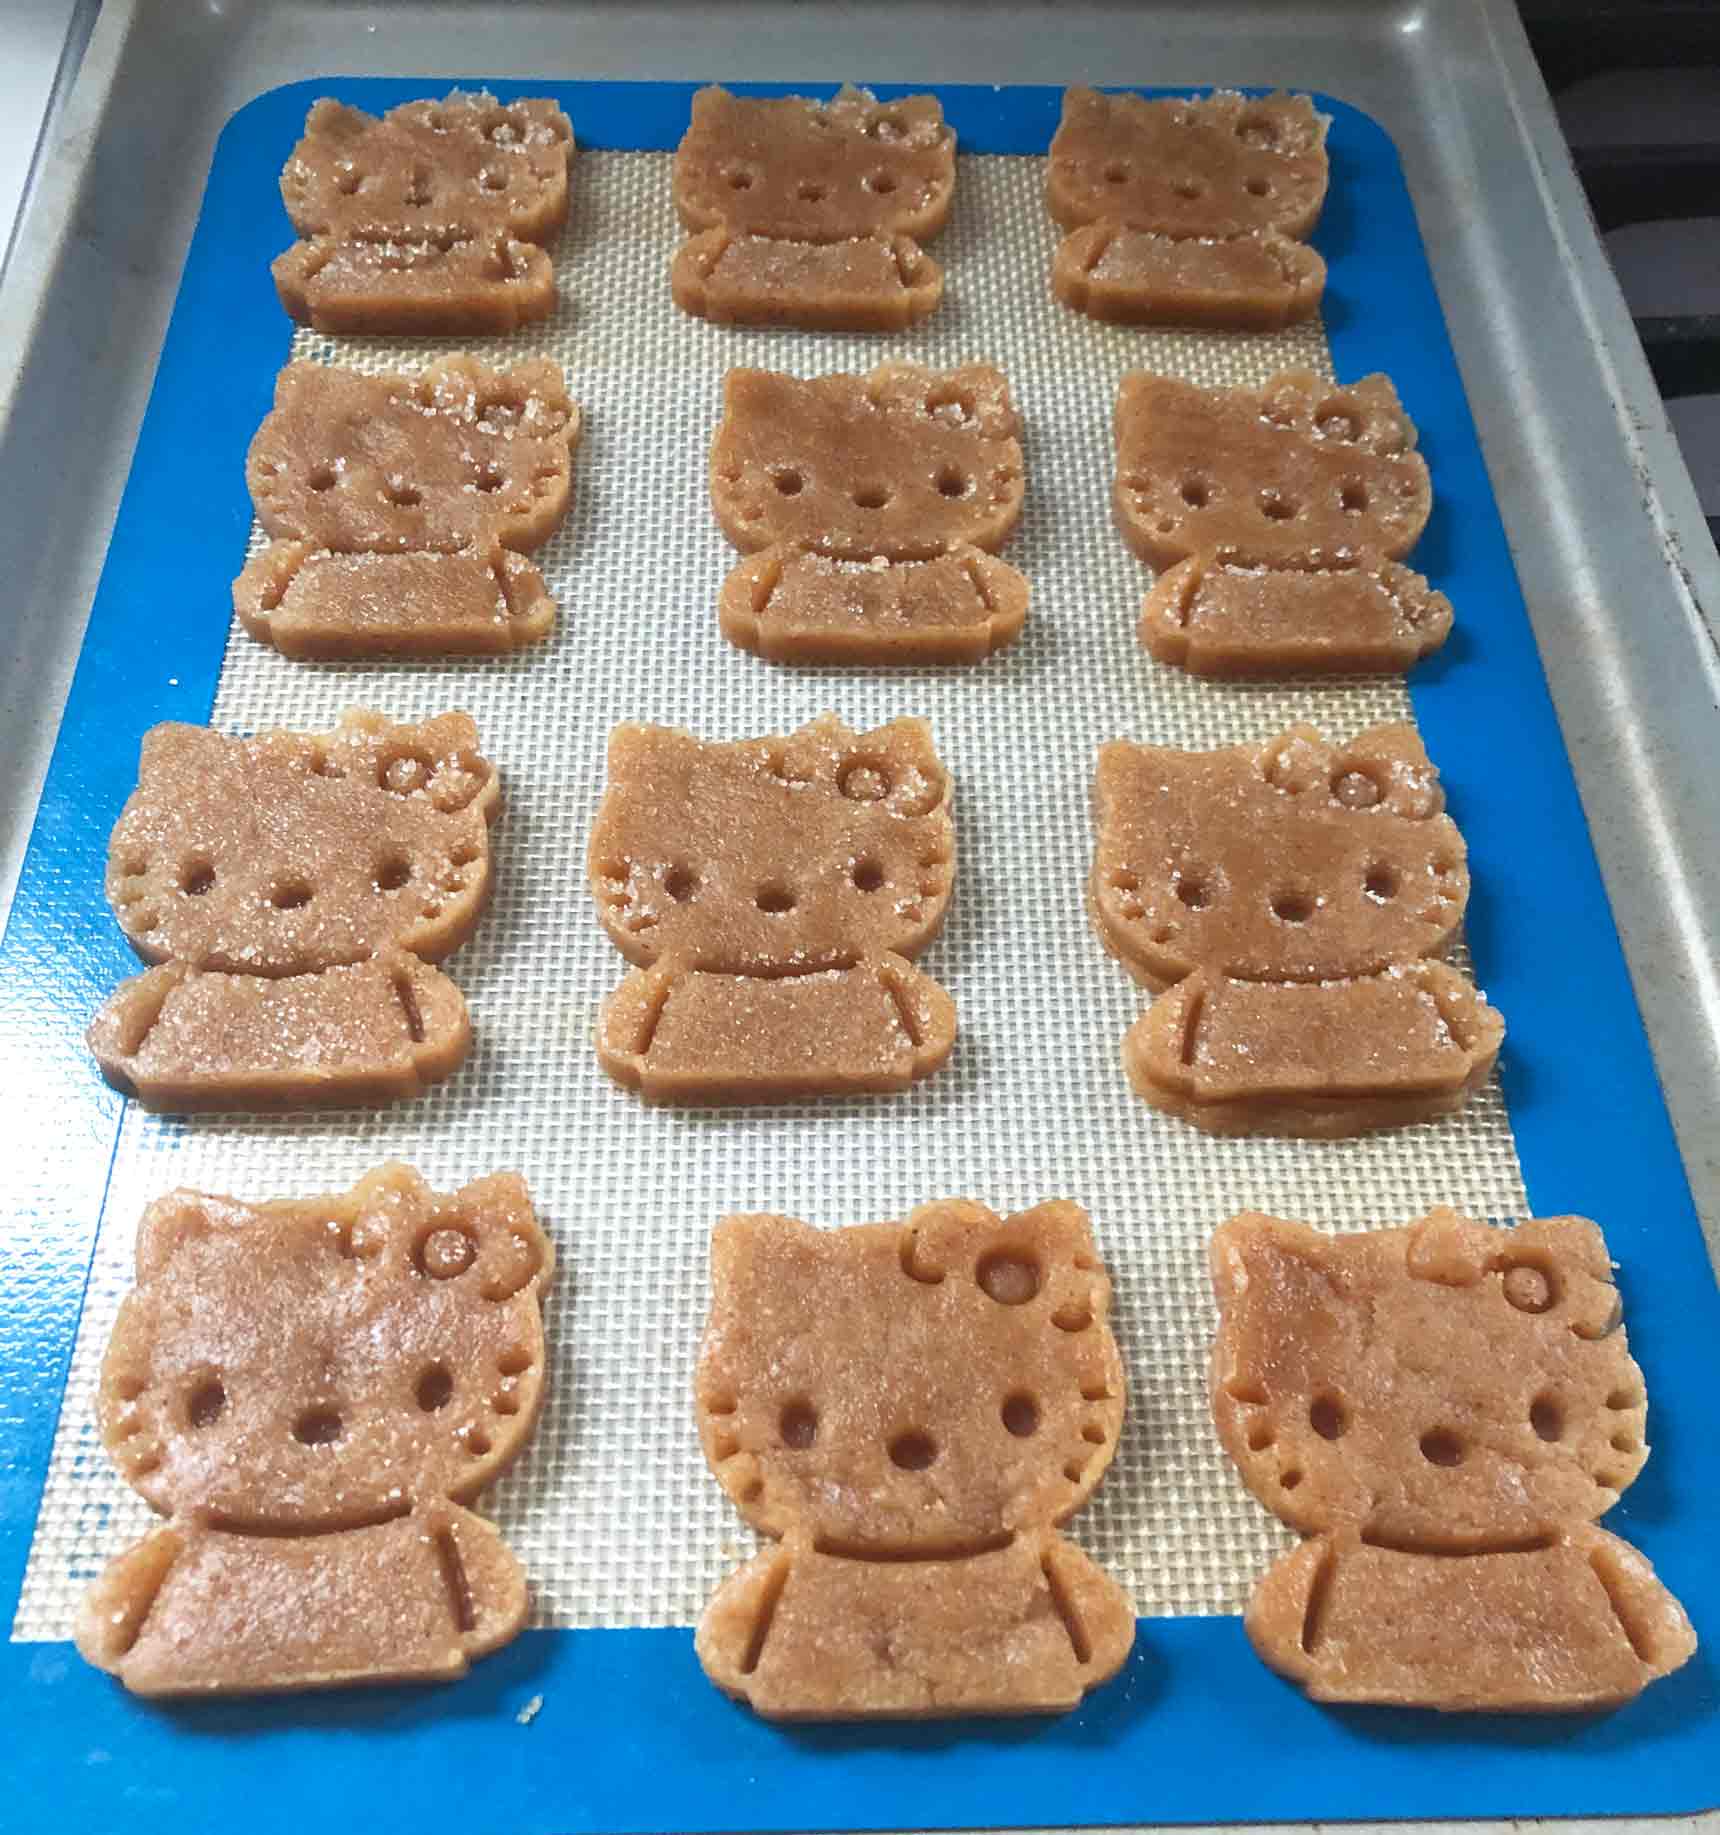 12 hello kitty peanut butter cookies ready to bake